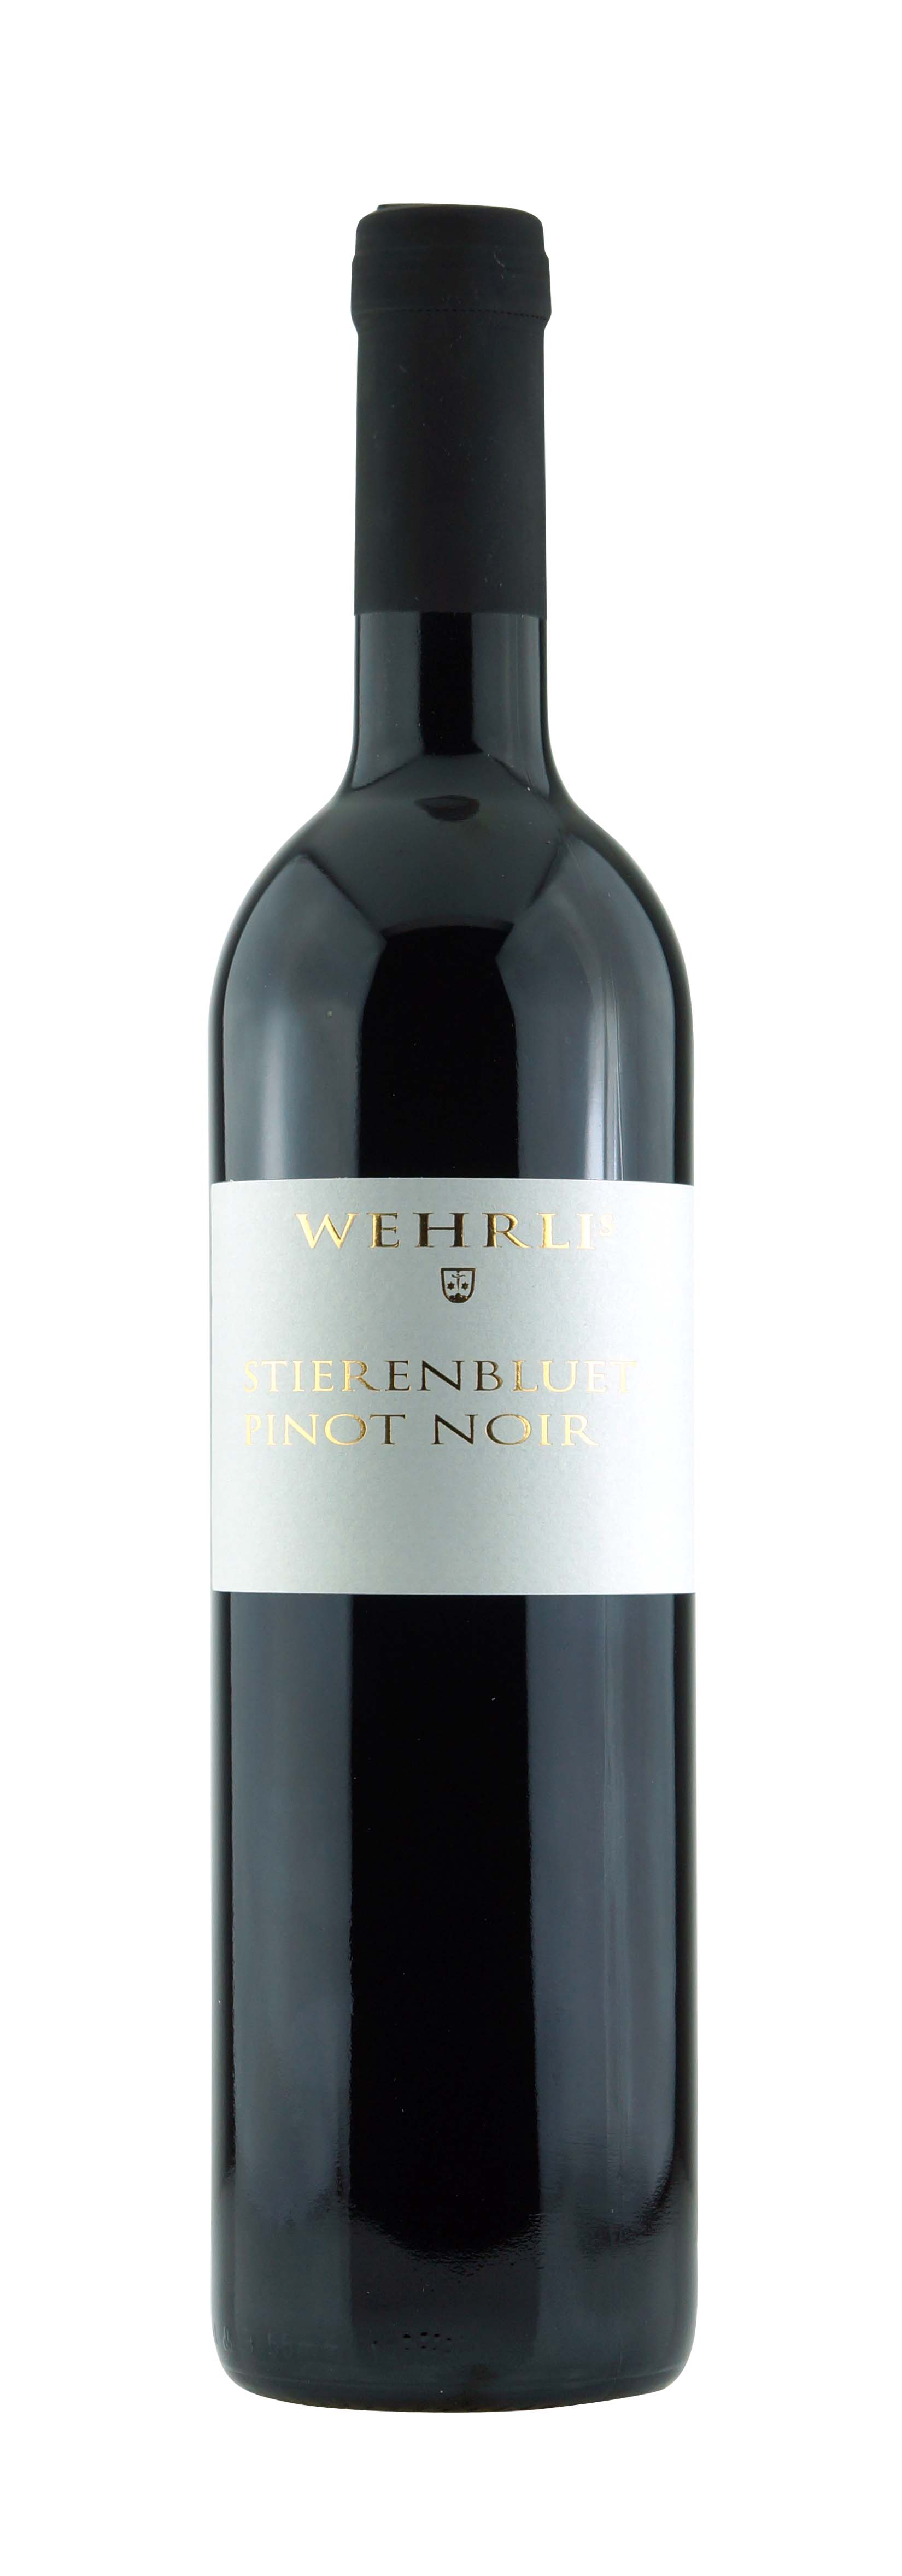 Aargau AOC Pinot Noir Stierenblut 2015